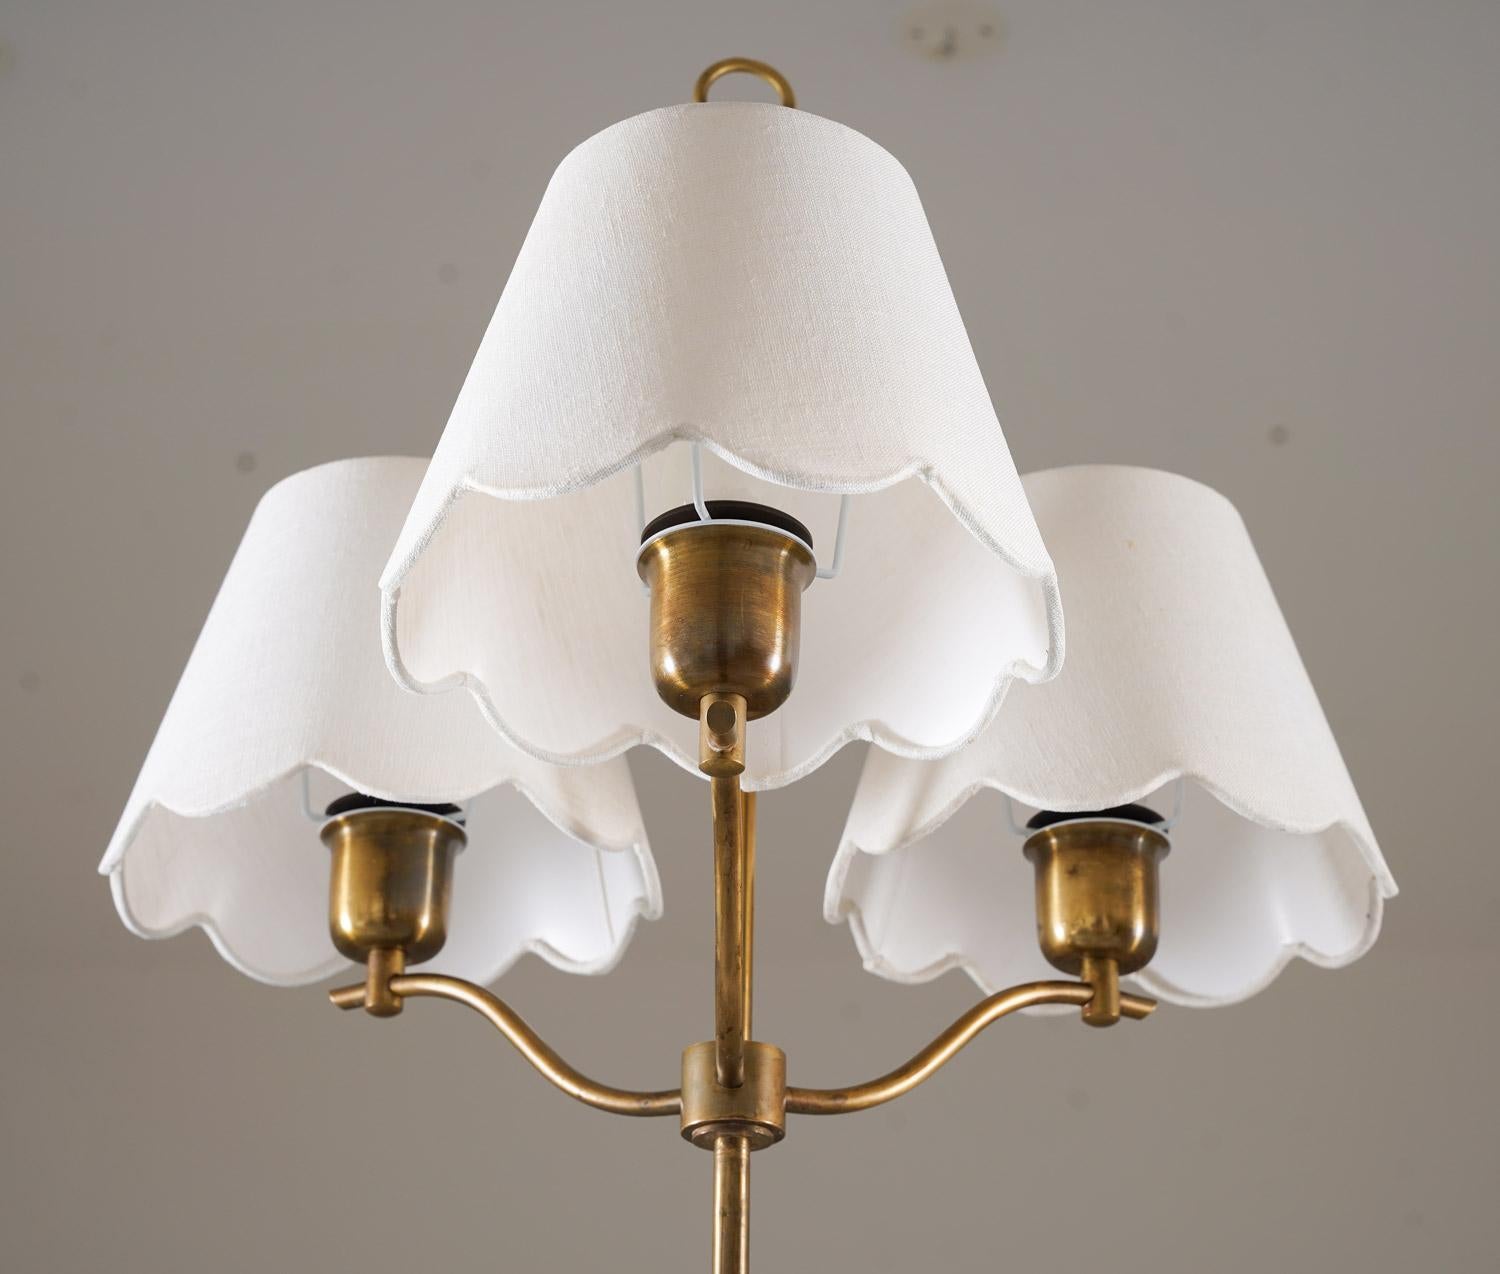 20th Century Swedish Modern Floor Lamp in Brass, 1940s For Sale